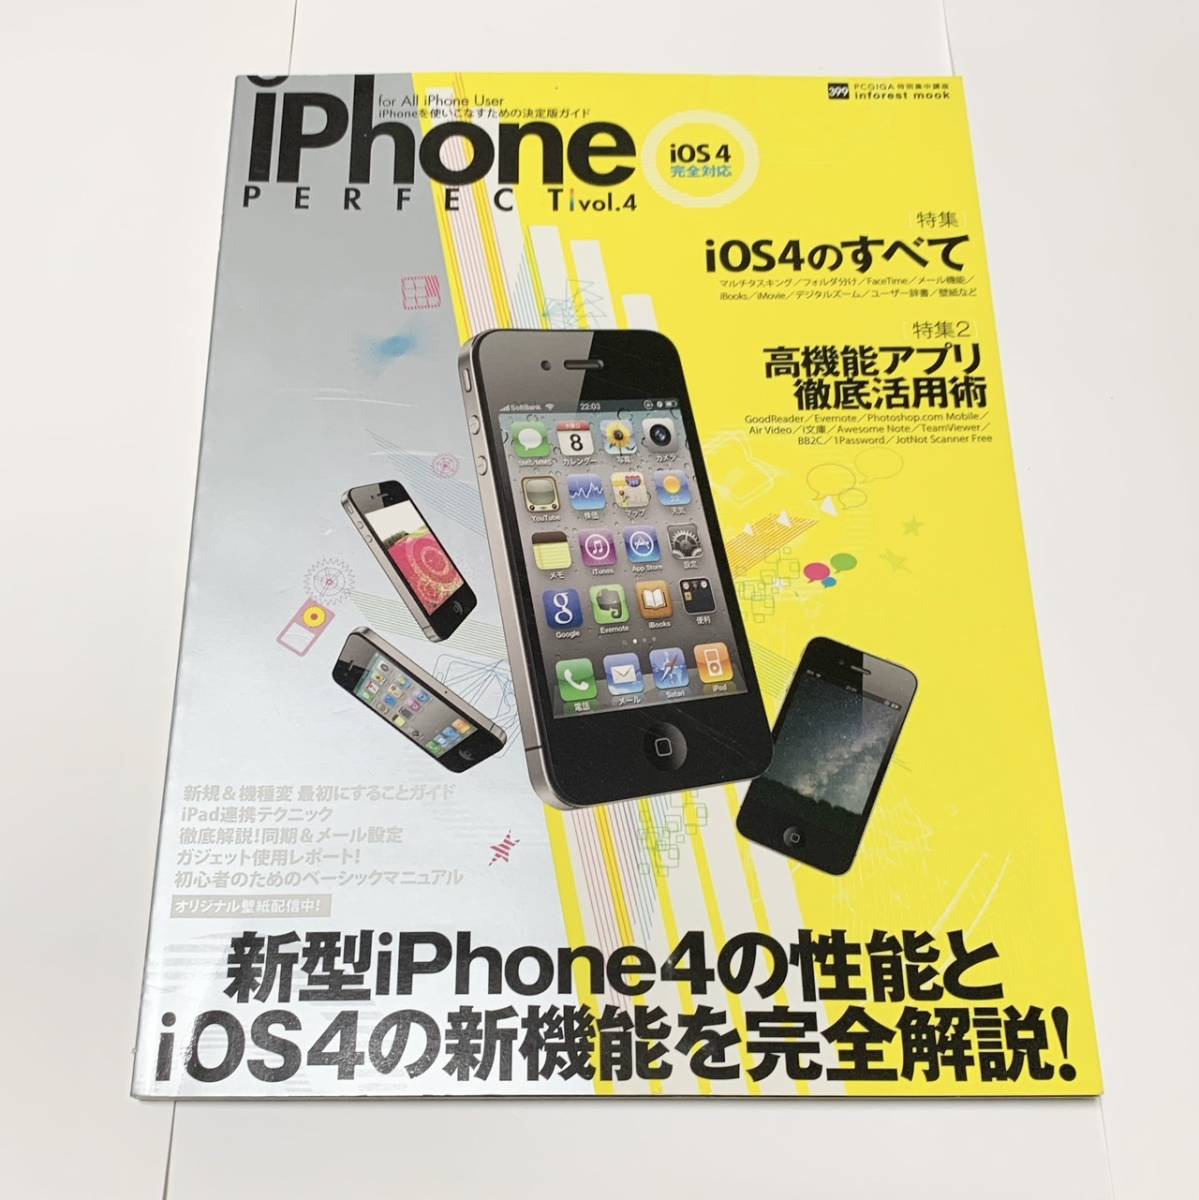  журнал iPhone PERFECT vol.4 IOS4. все 